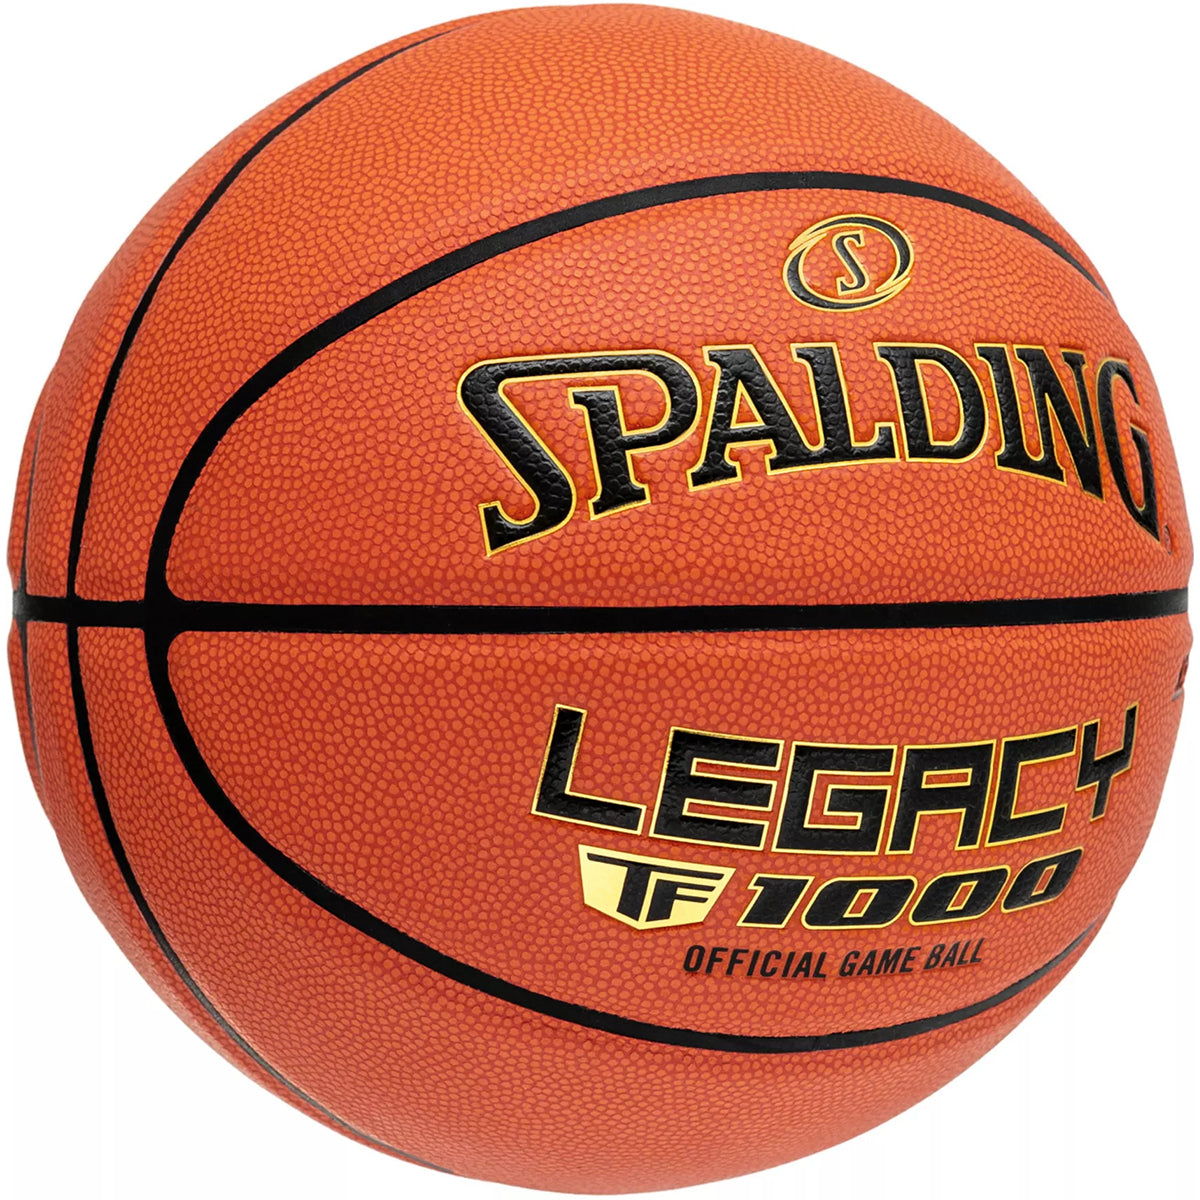 Spalding Legacy Indoor Game Basketball - Orange Spalding